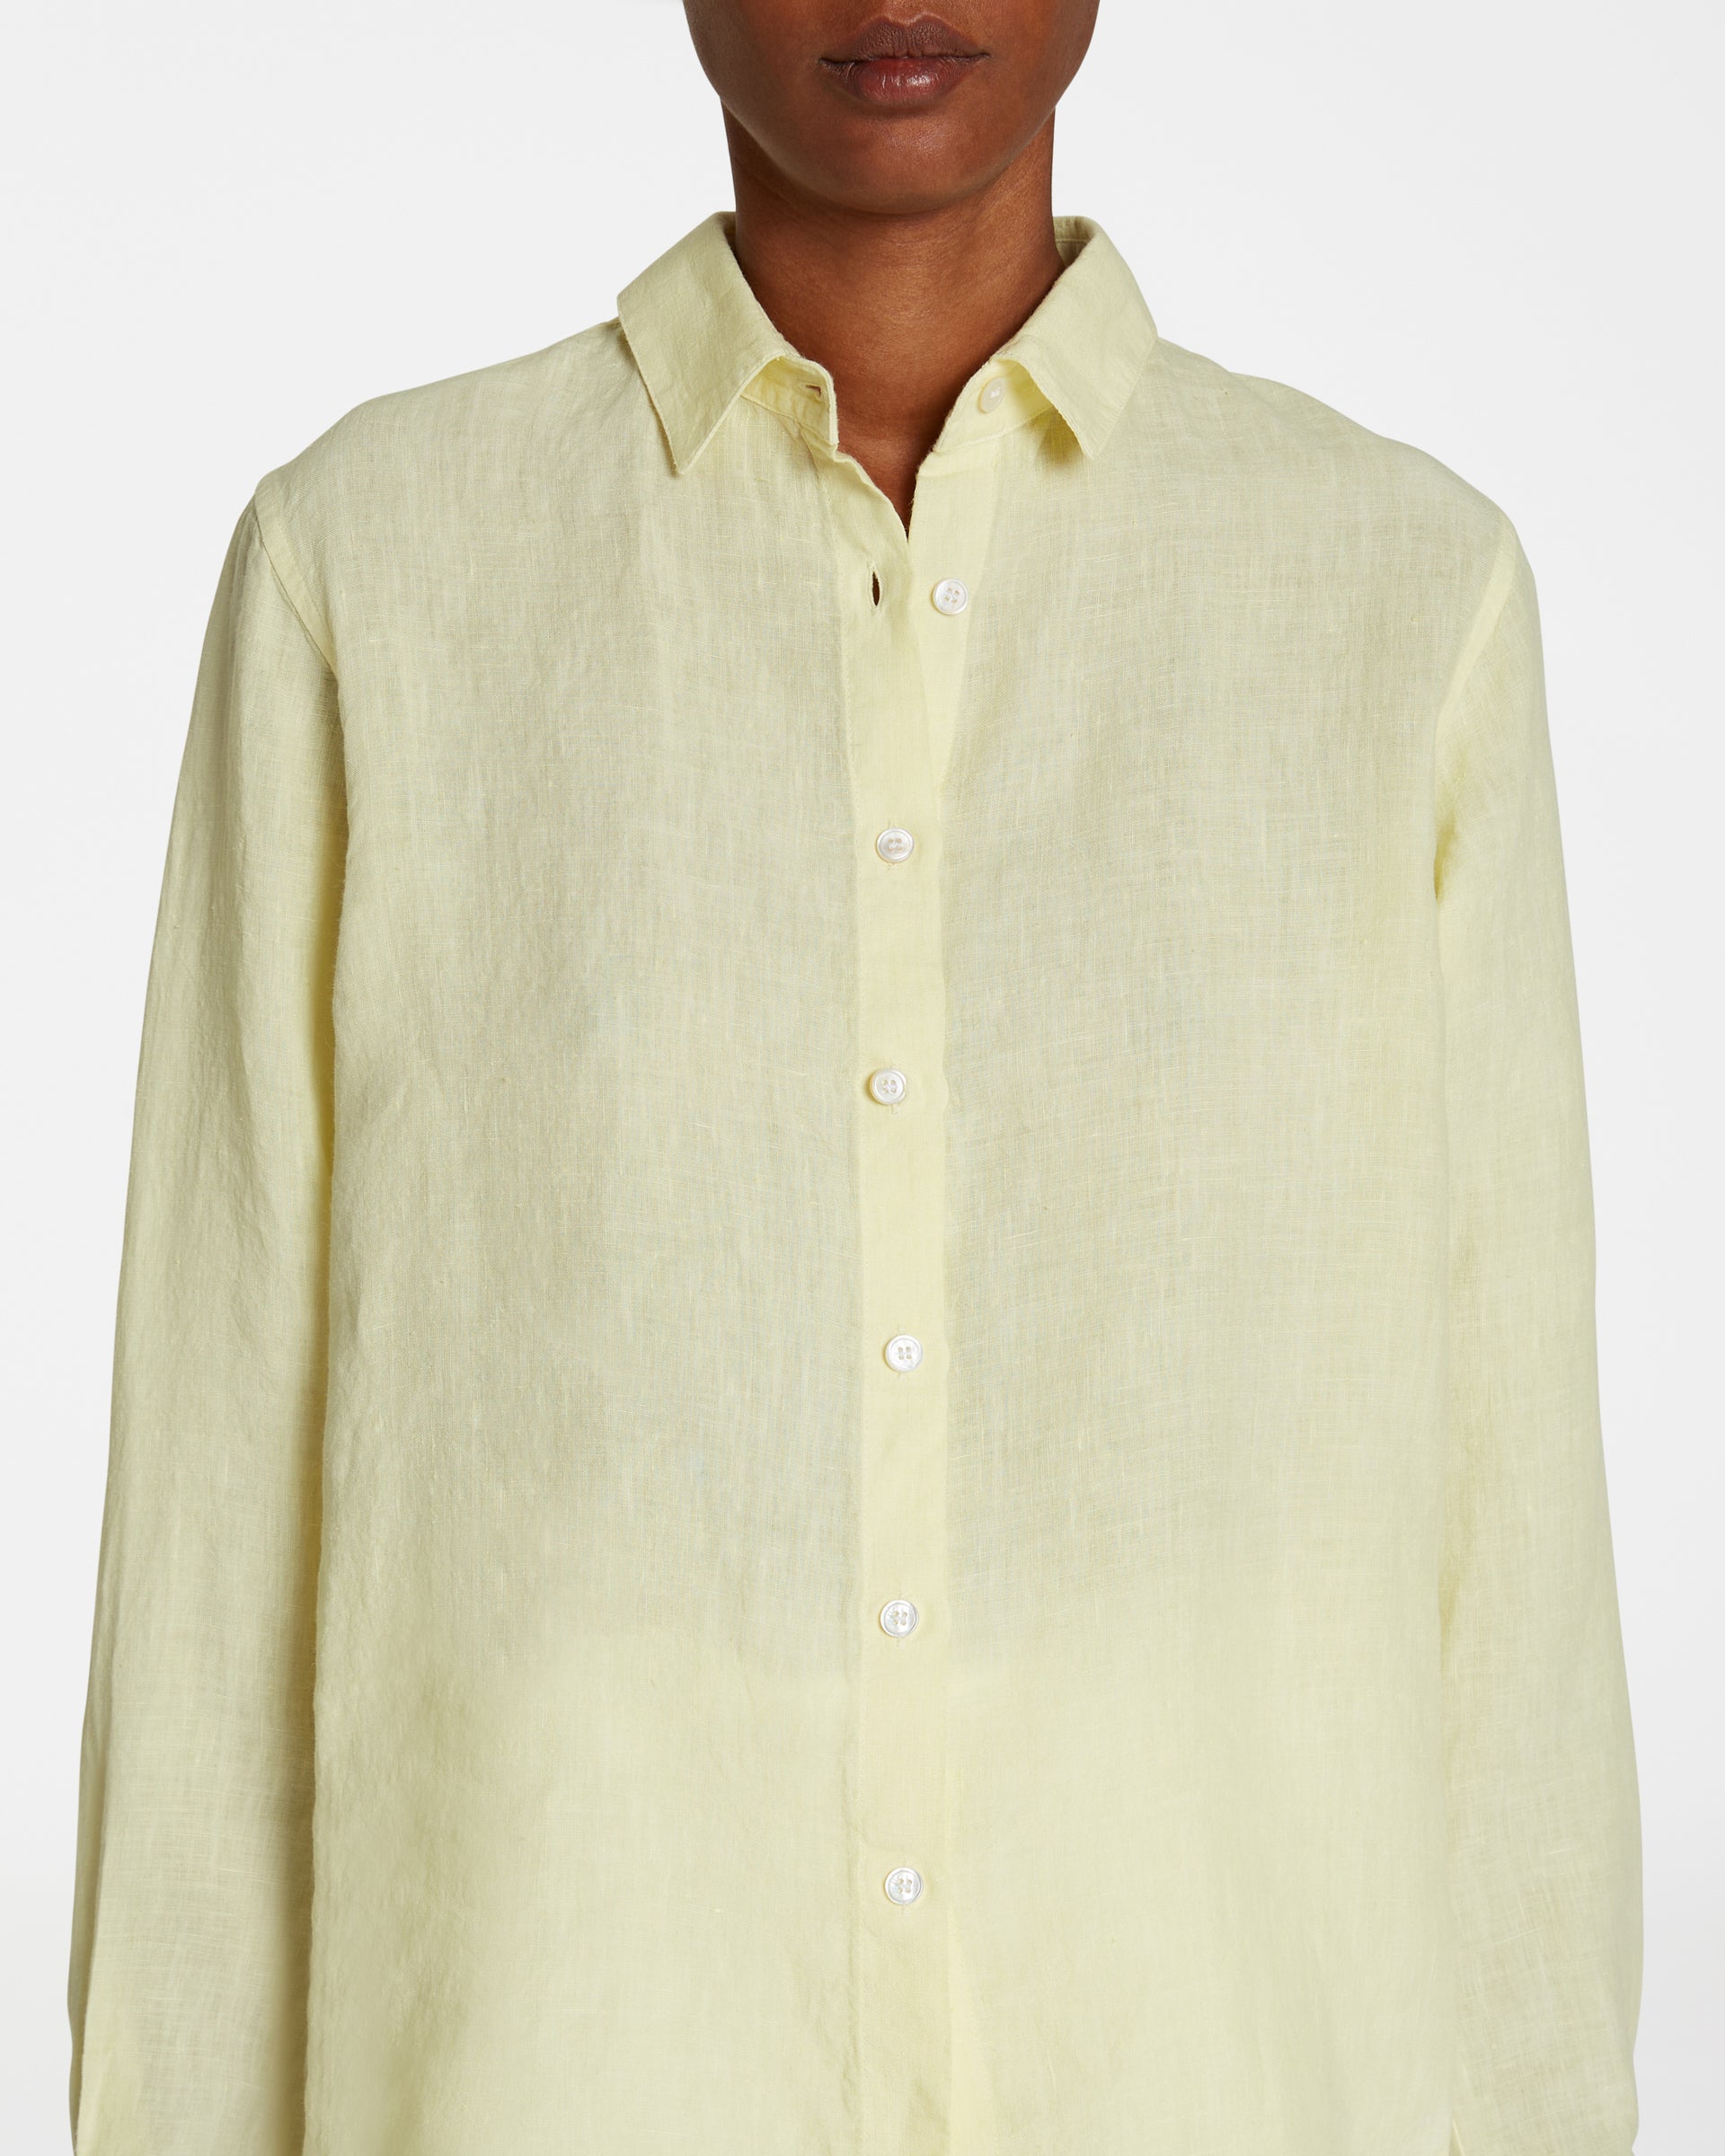 Light Wind Sparrow Shirt in Lime Linen